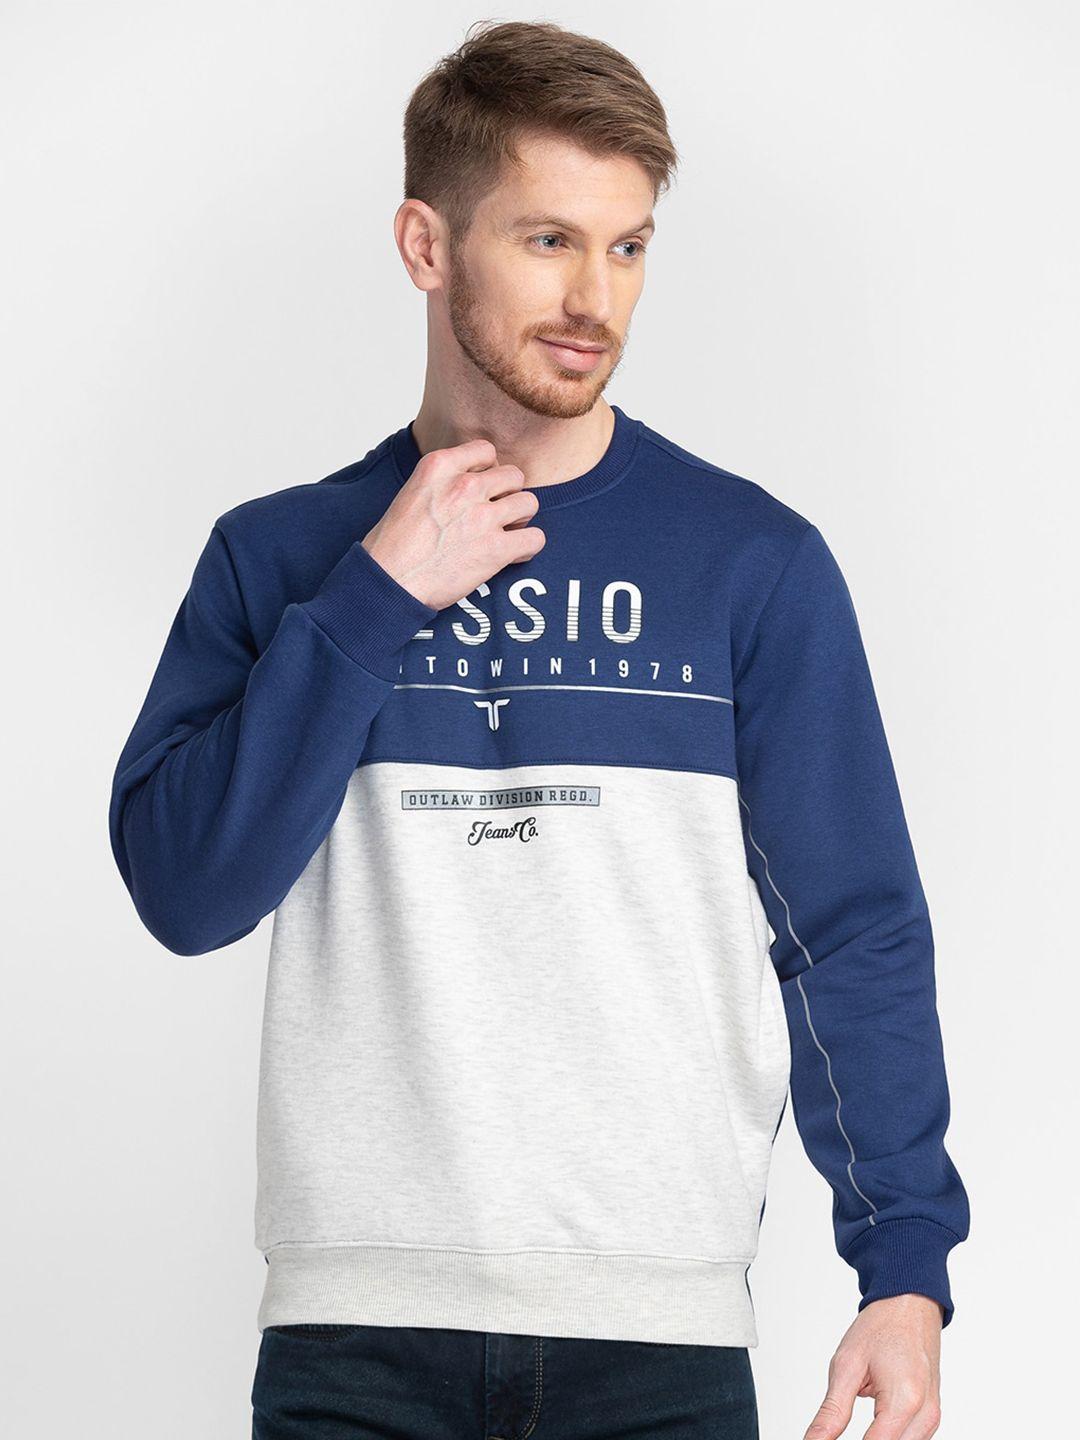 tessio-men-cream-coloured-colourblocked-sweatshirt